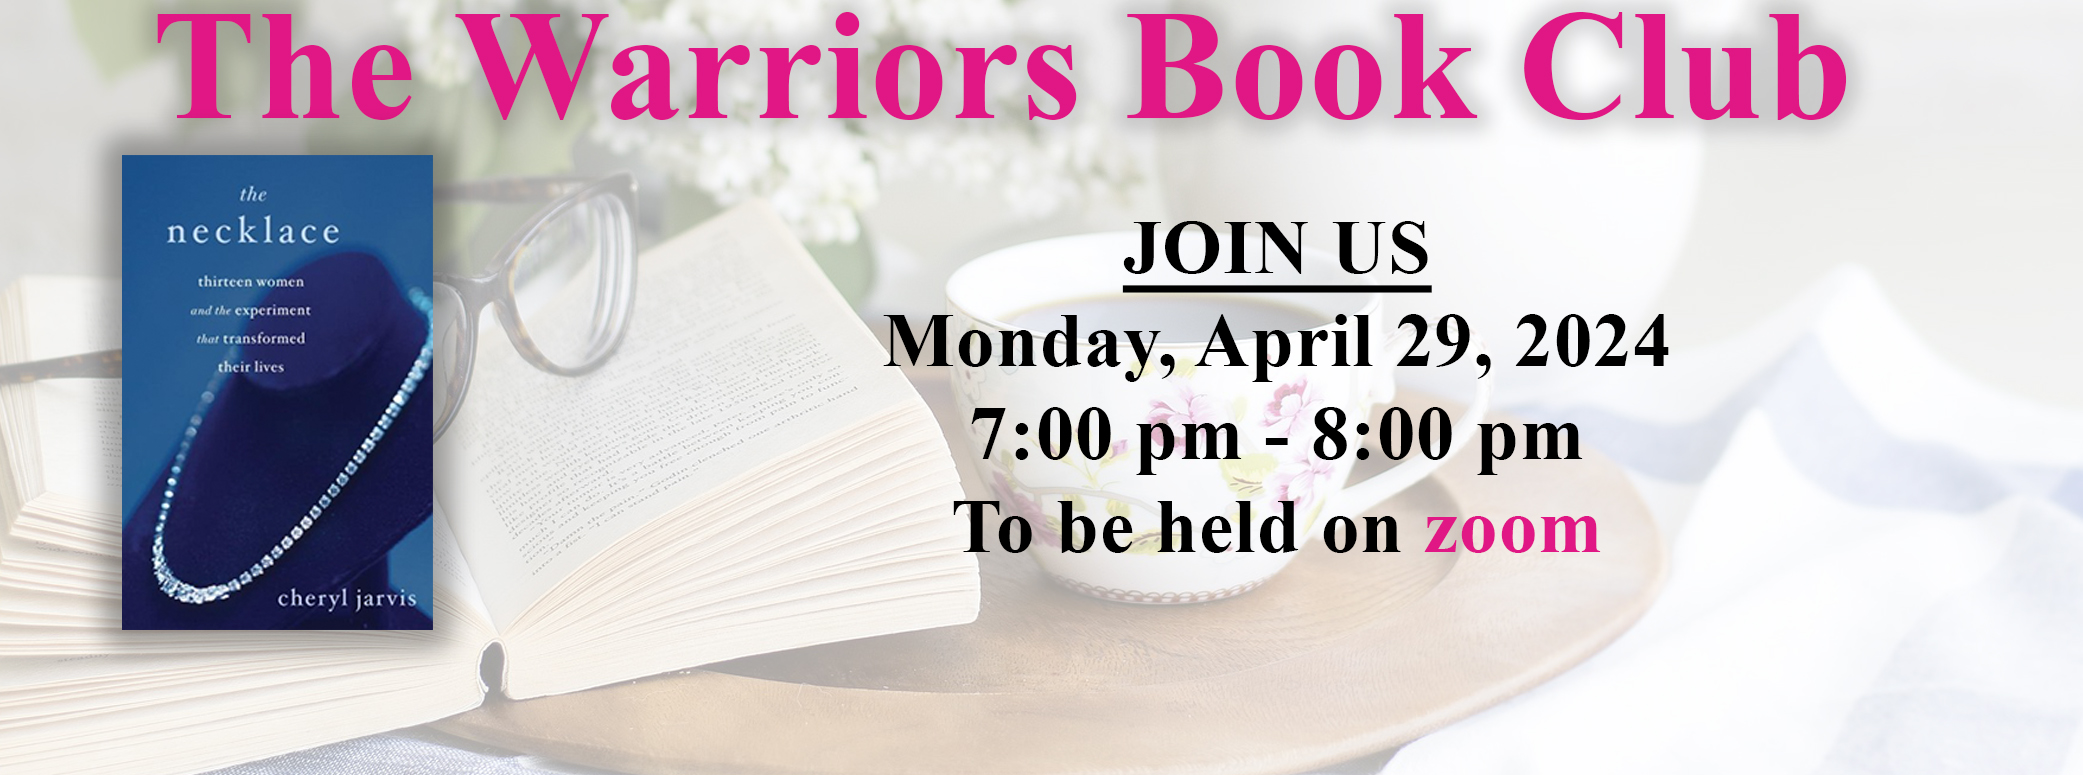 the warriors book club_4.29